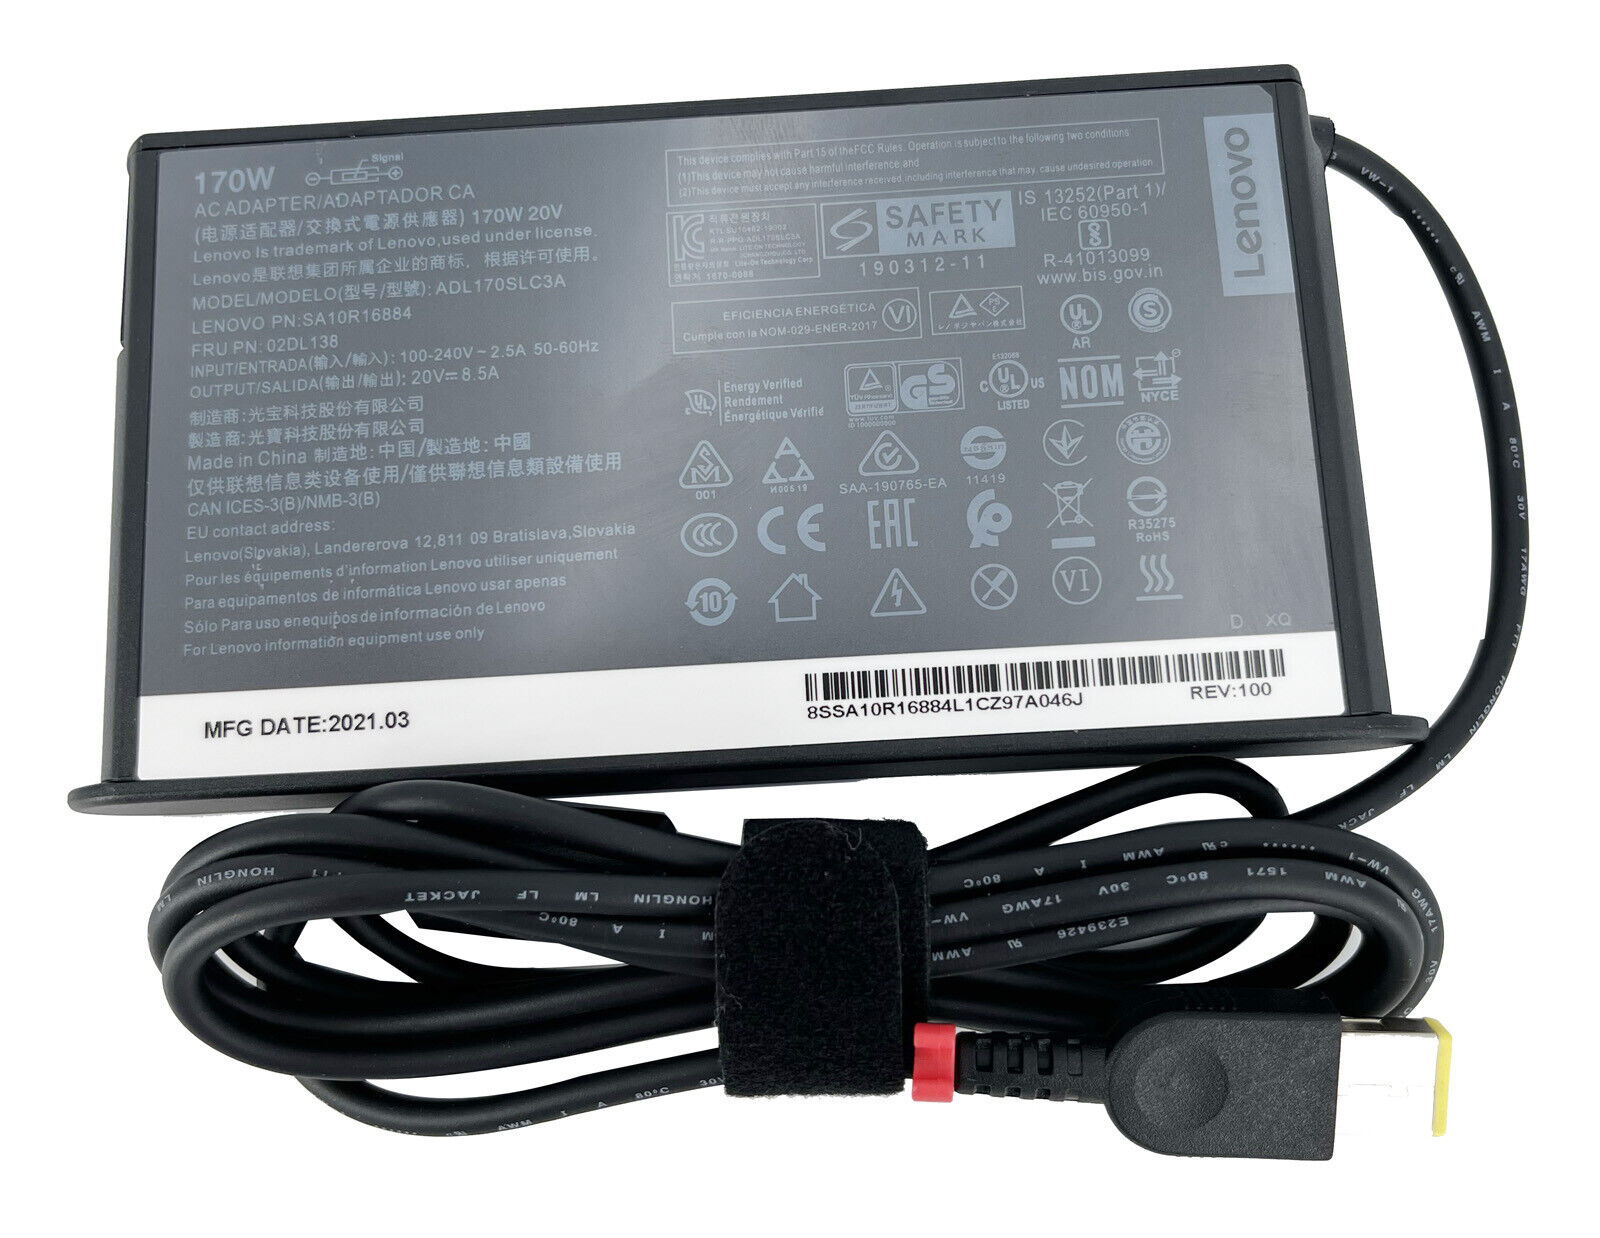 *Brand NEW* For Lenovo LEGION 5 I5-10300H 20V 8.5A 170W USB ADL170SLC3A AC Adapter Charger